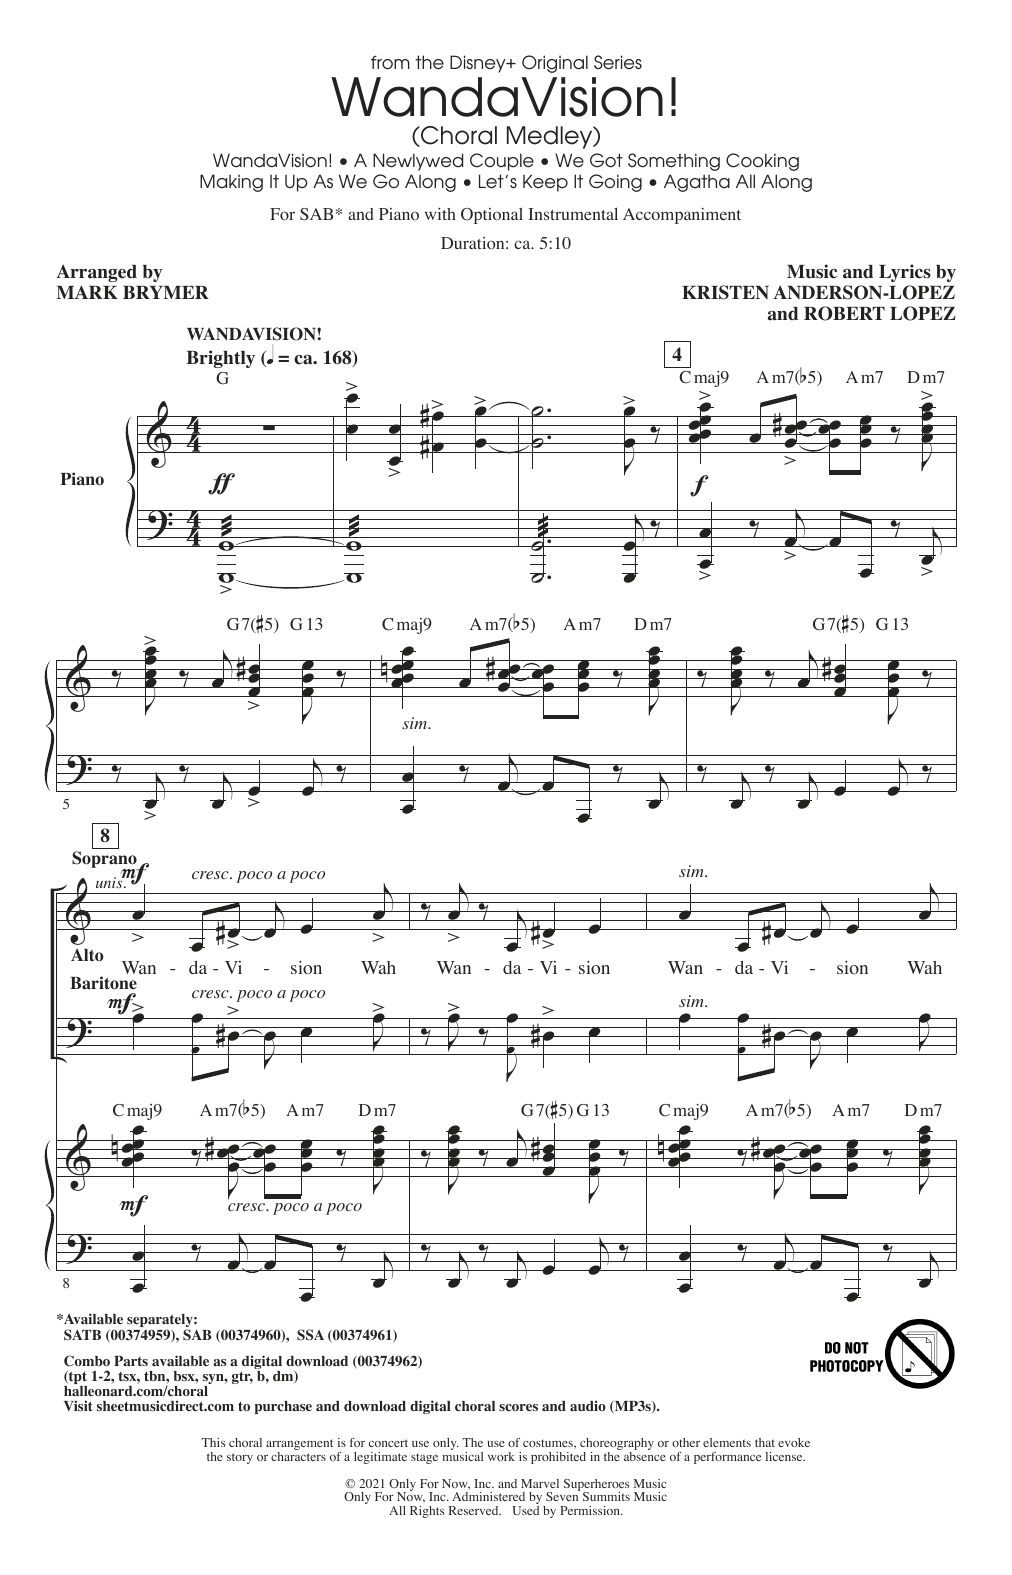 Kristen Anderson-Lopez & Robert Lopez WandaVision! (Choral Medley) (arr. Mark Brymer) Sheet Music Notes & Chords for SATB Choir - Download or Print PDF